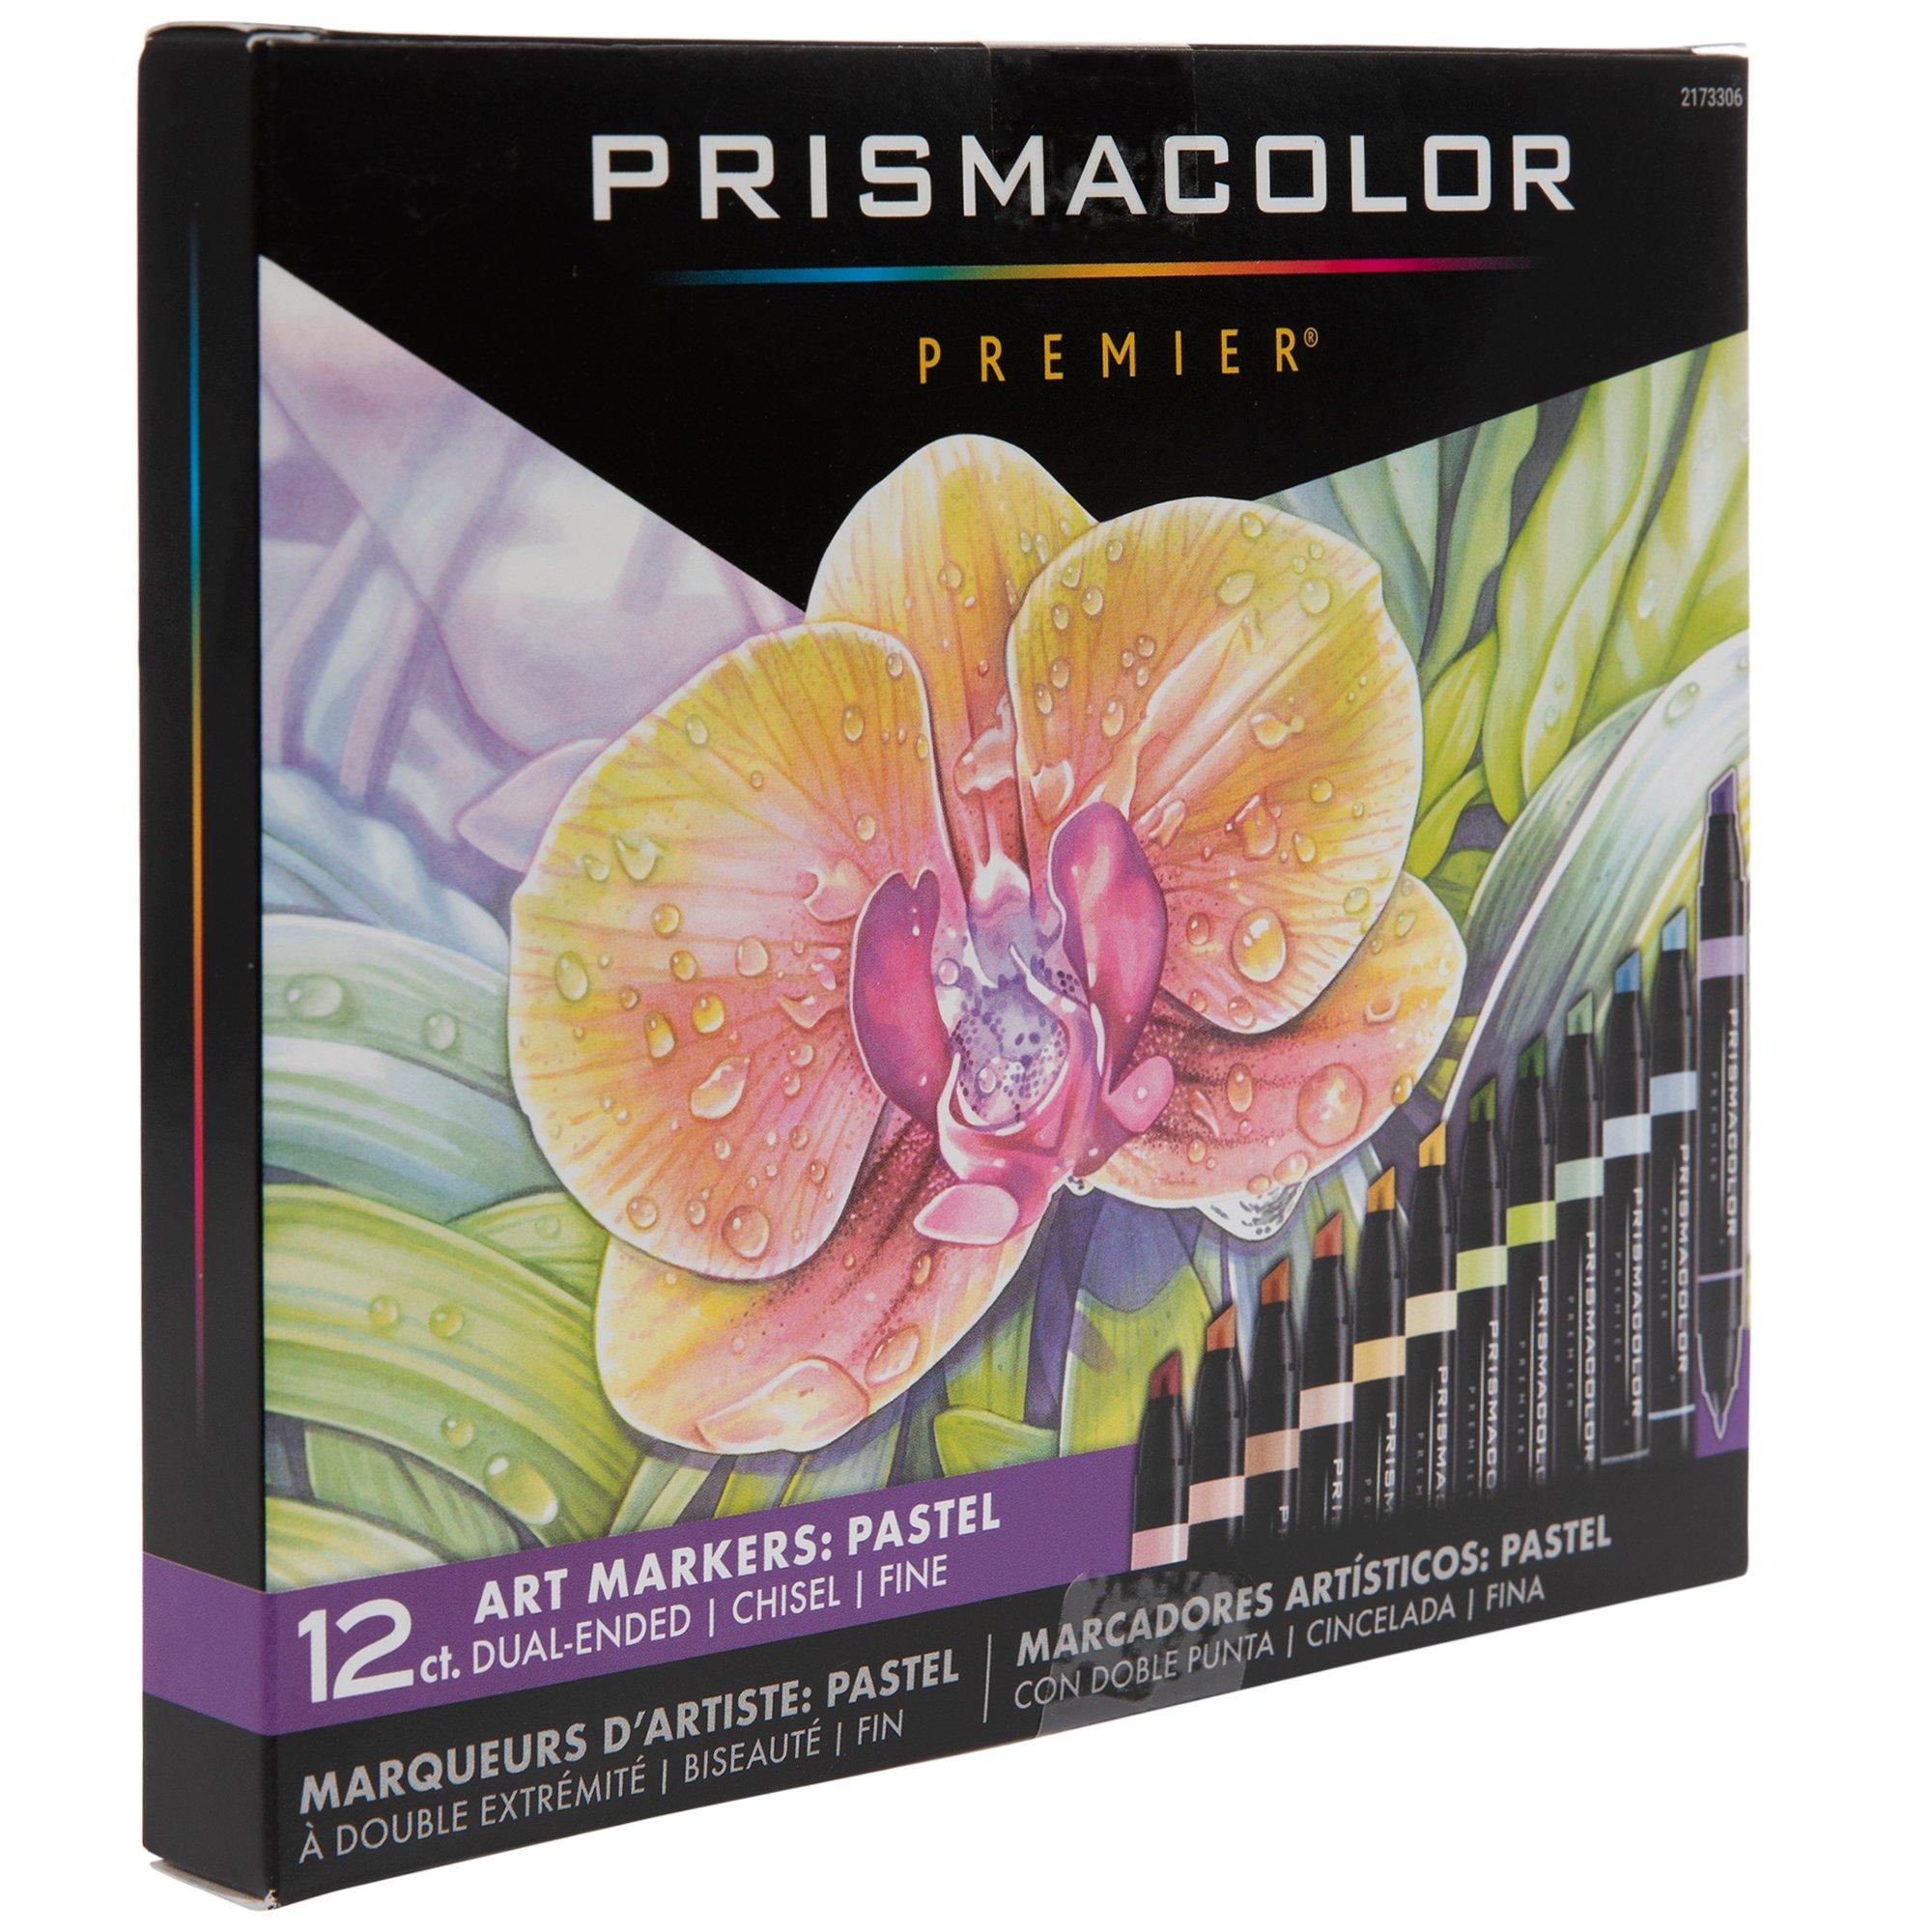 Prismacolor Art Sets in Art Supplies 